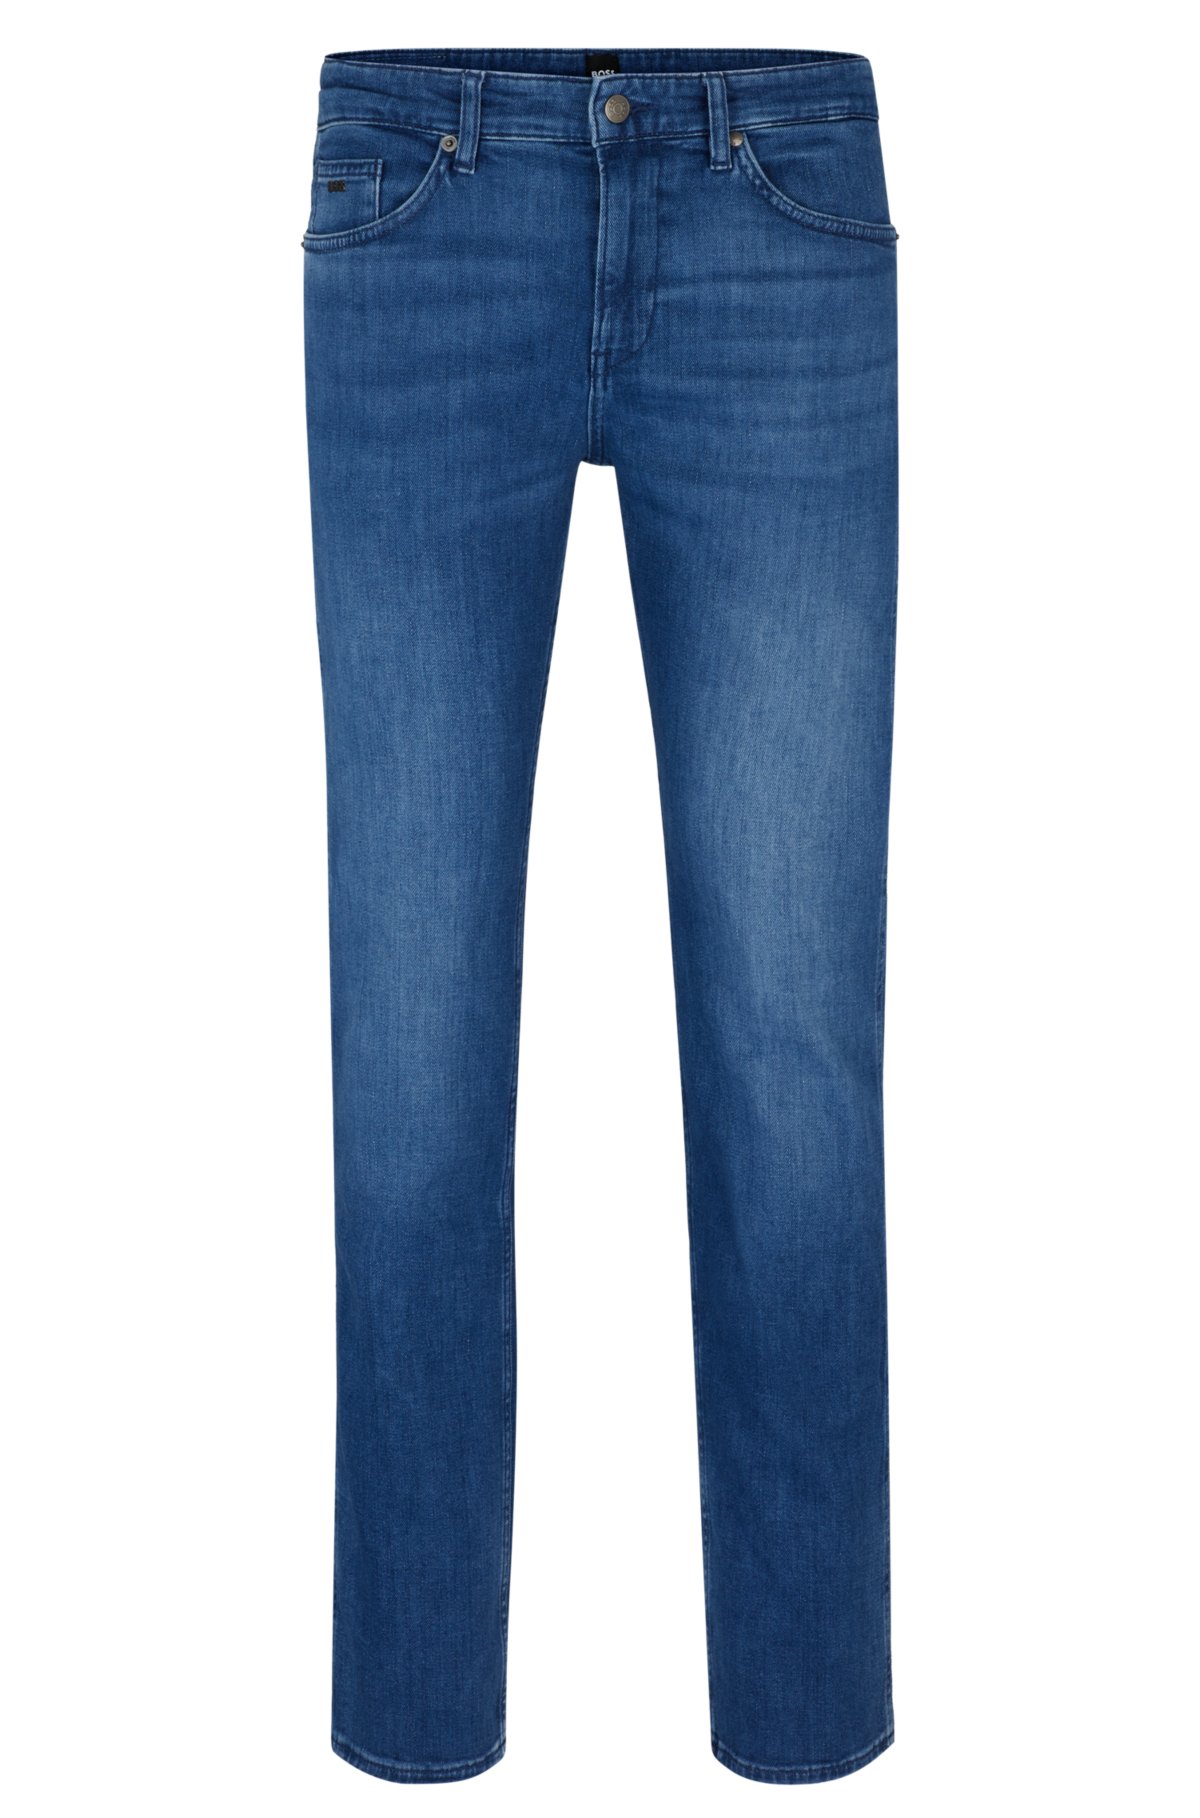 Italian denim in cashmere-touch blue jeans Slim-fit - BOSS